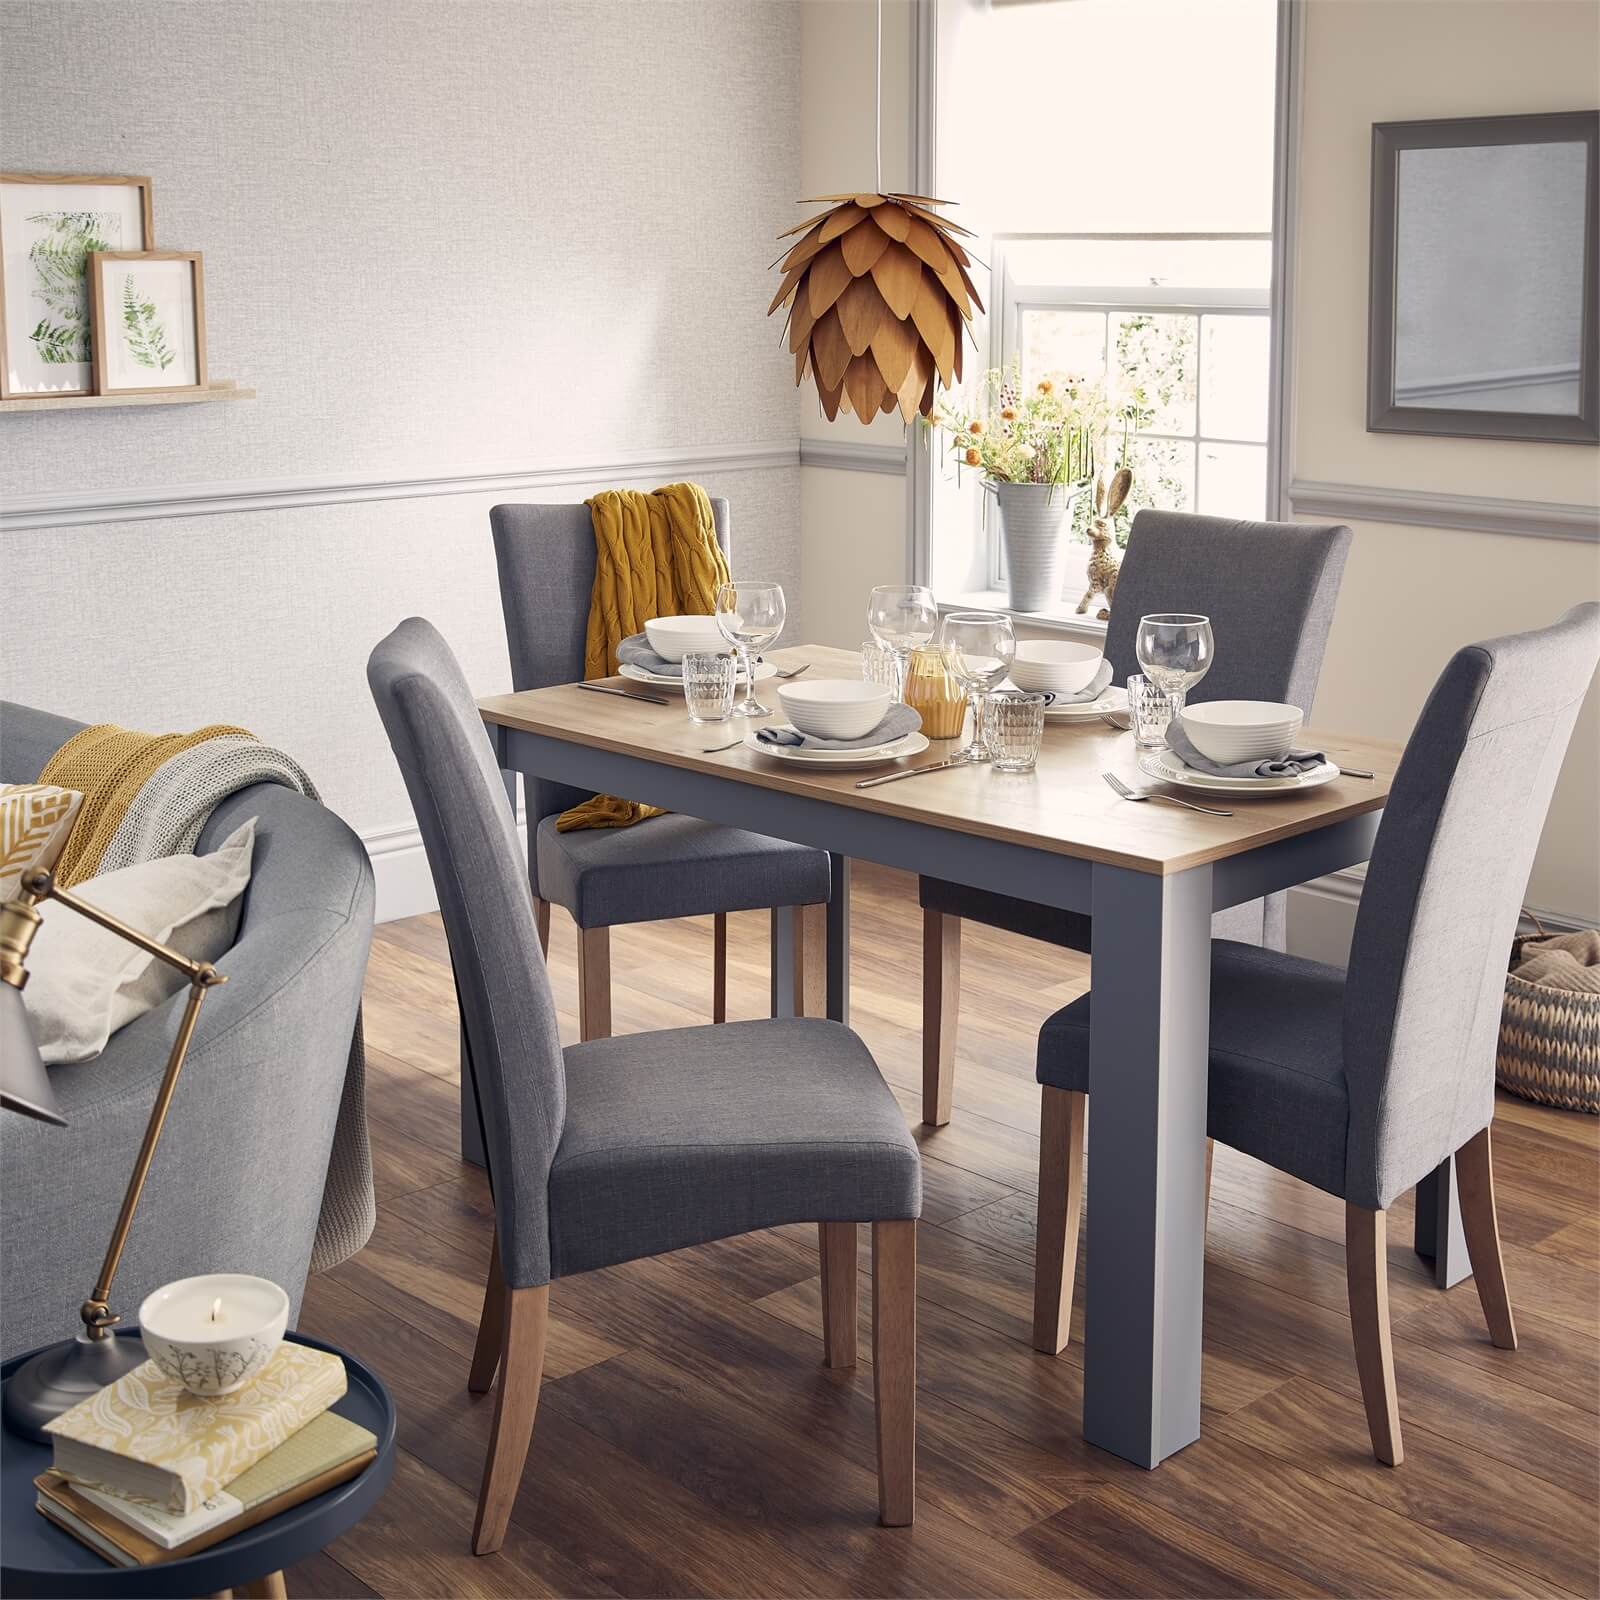 Ashton Dining Chair - Grey - Set of 2